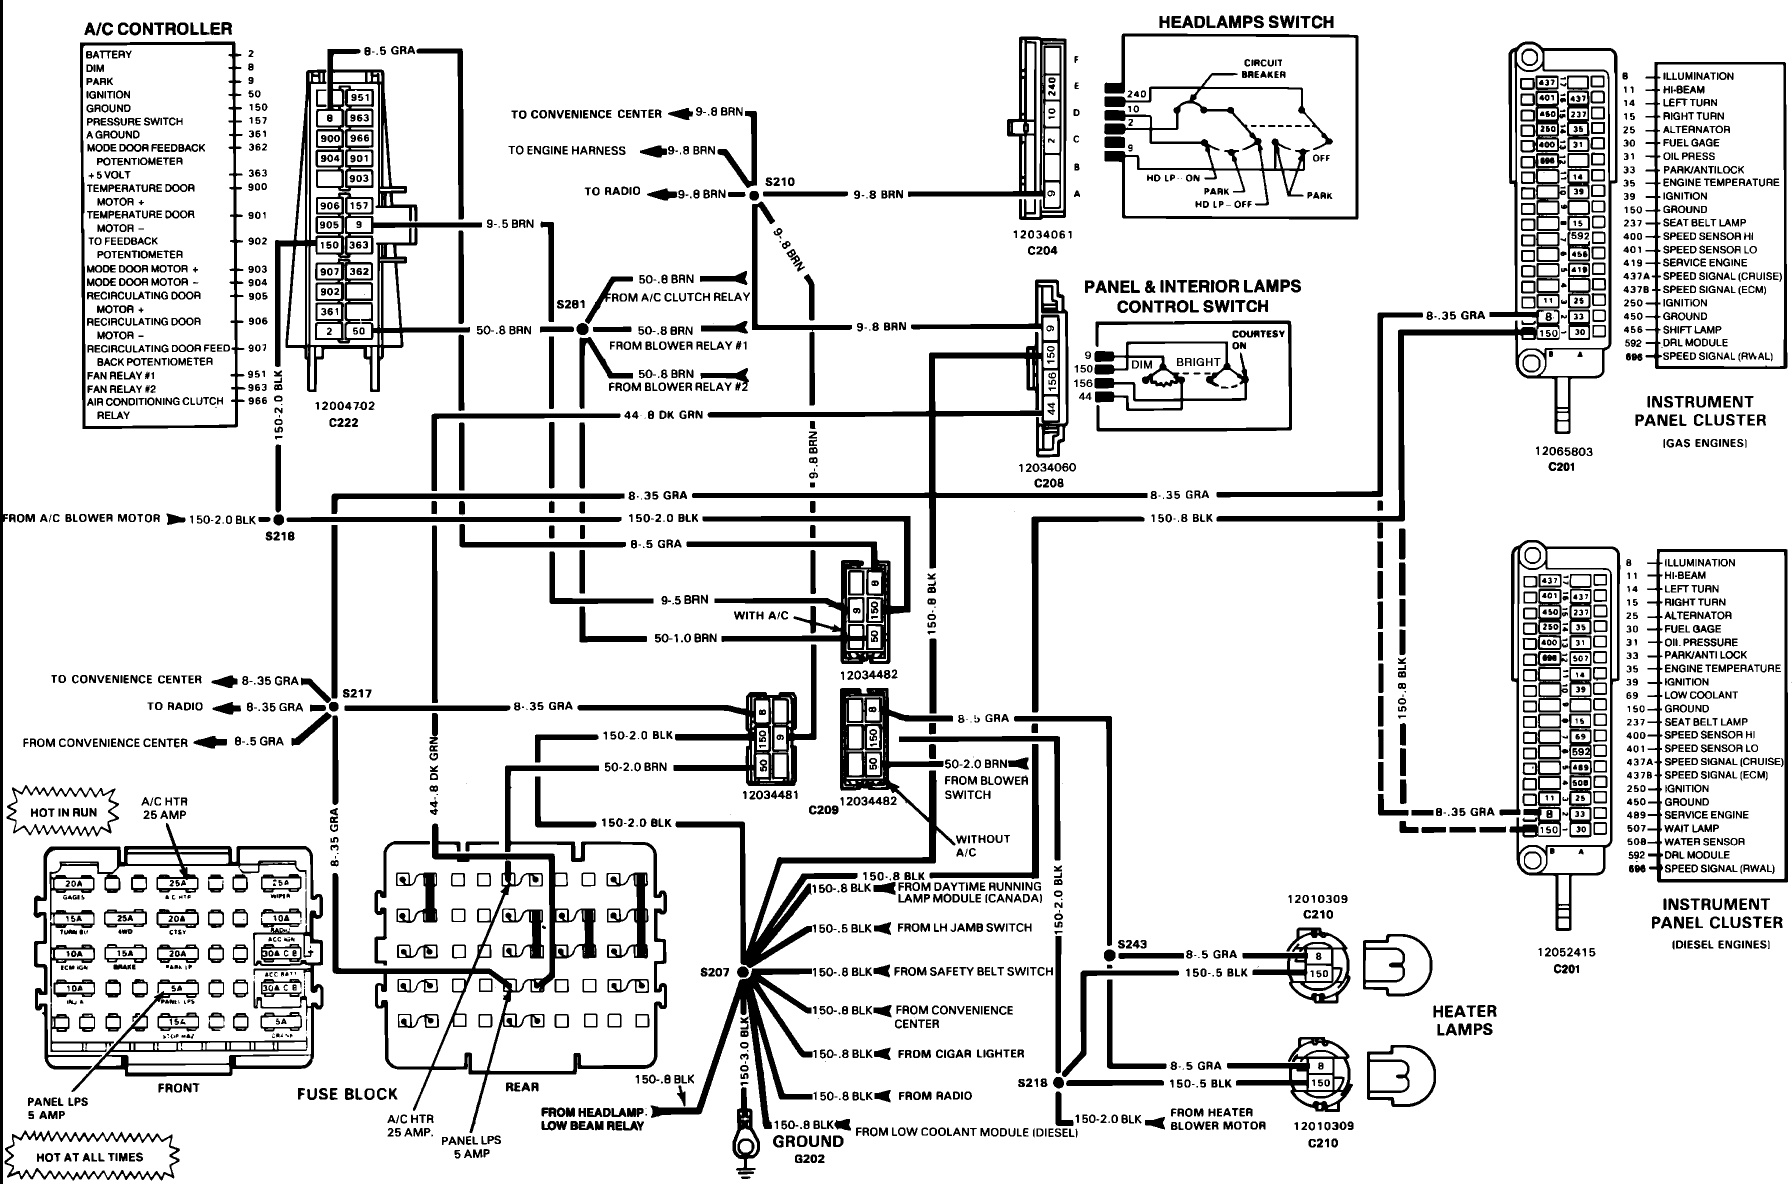 1994 Chevy Truck Wiring Diagram